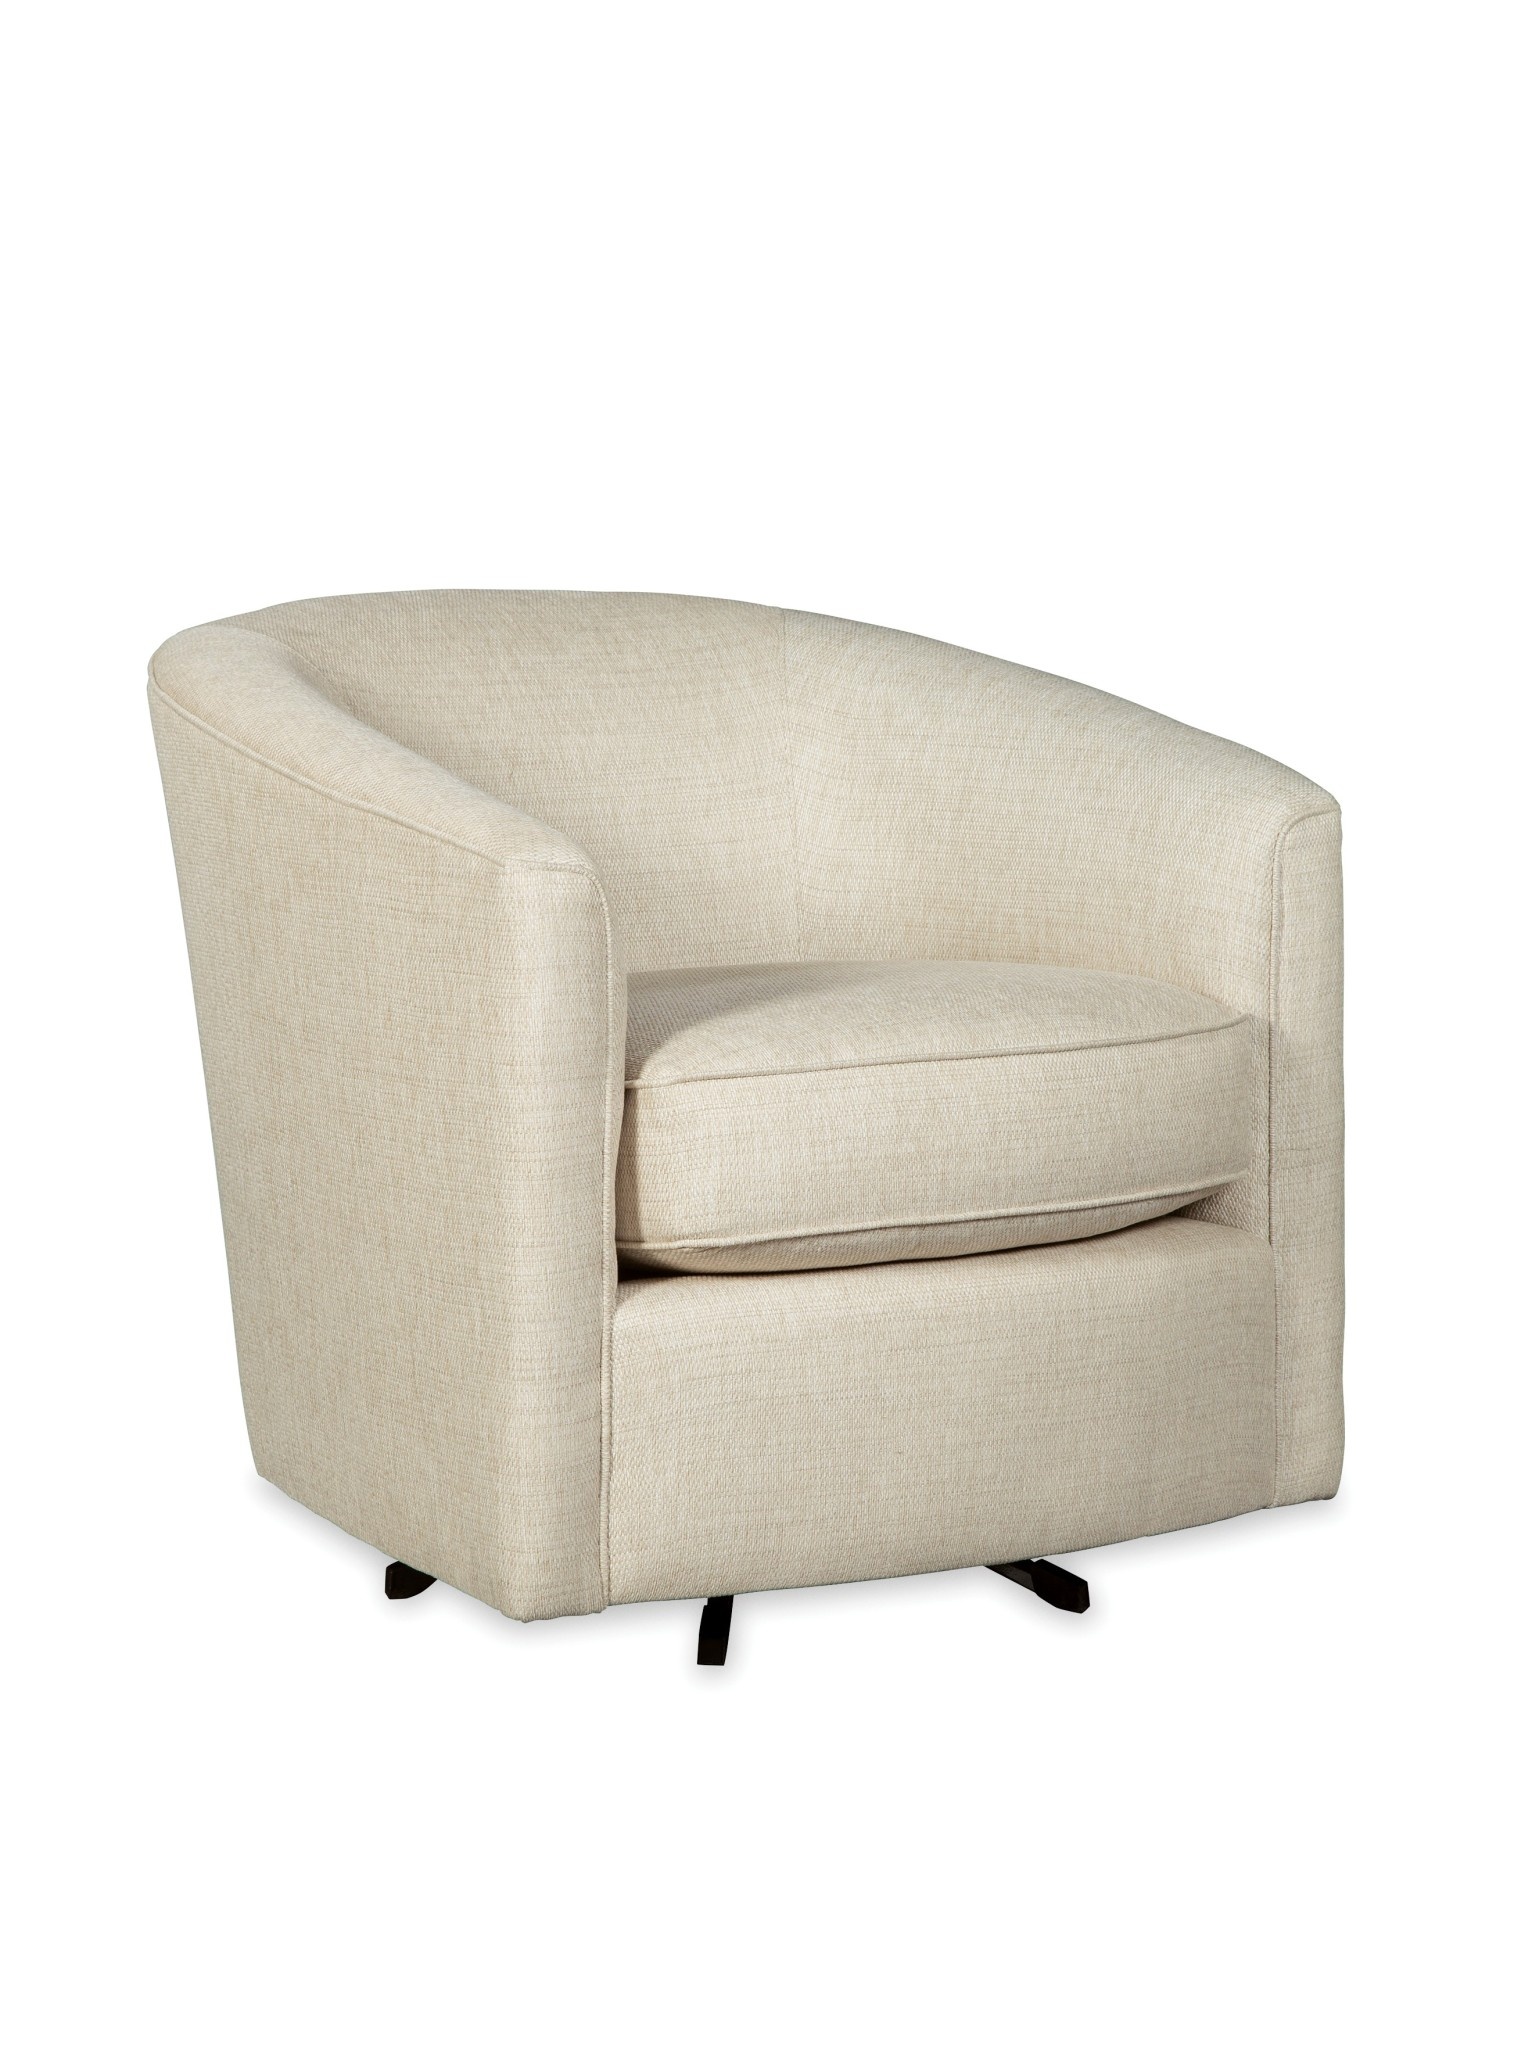 Craftmaster Furniture 006510SC Swivel Chair